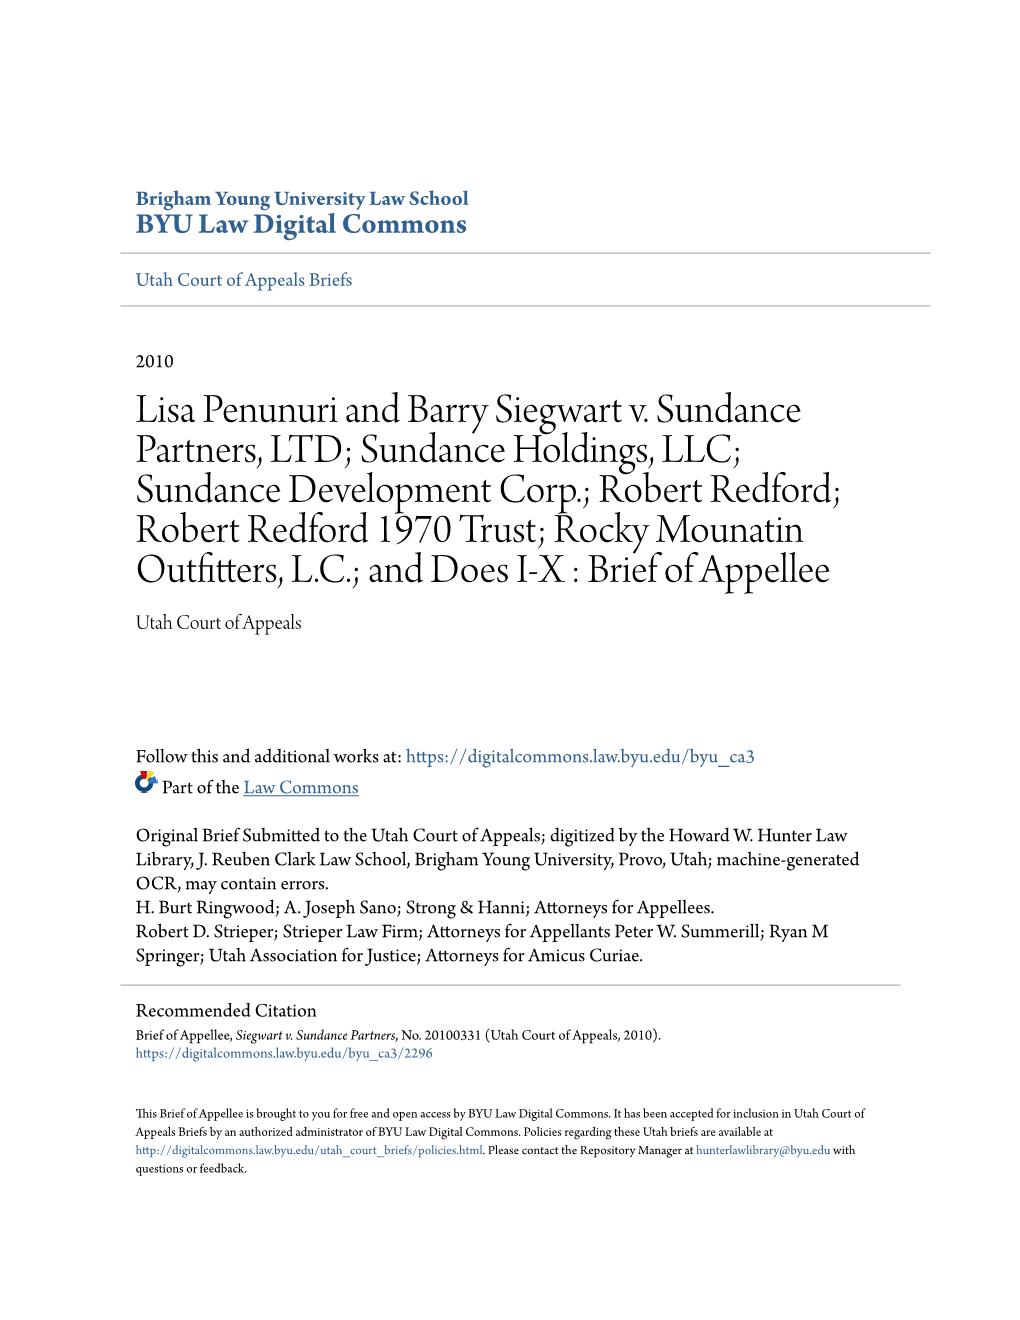 Lisa Penunuri and Barry Siegwart V. Sundance Partners